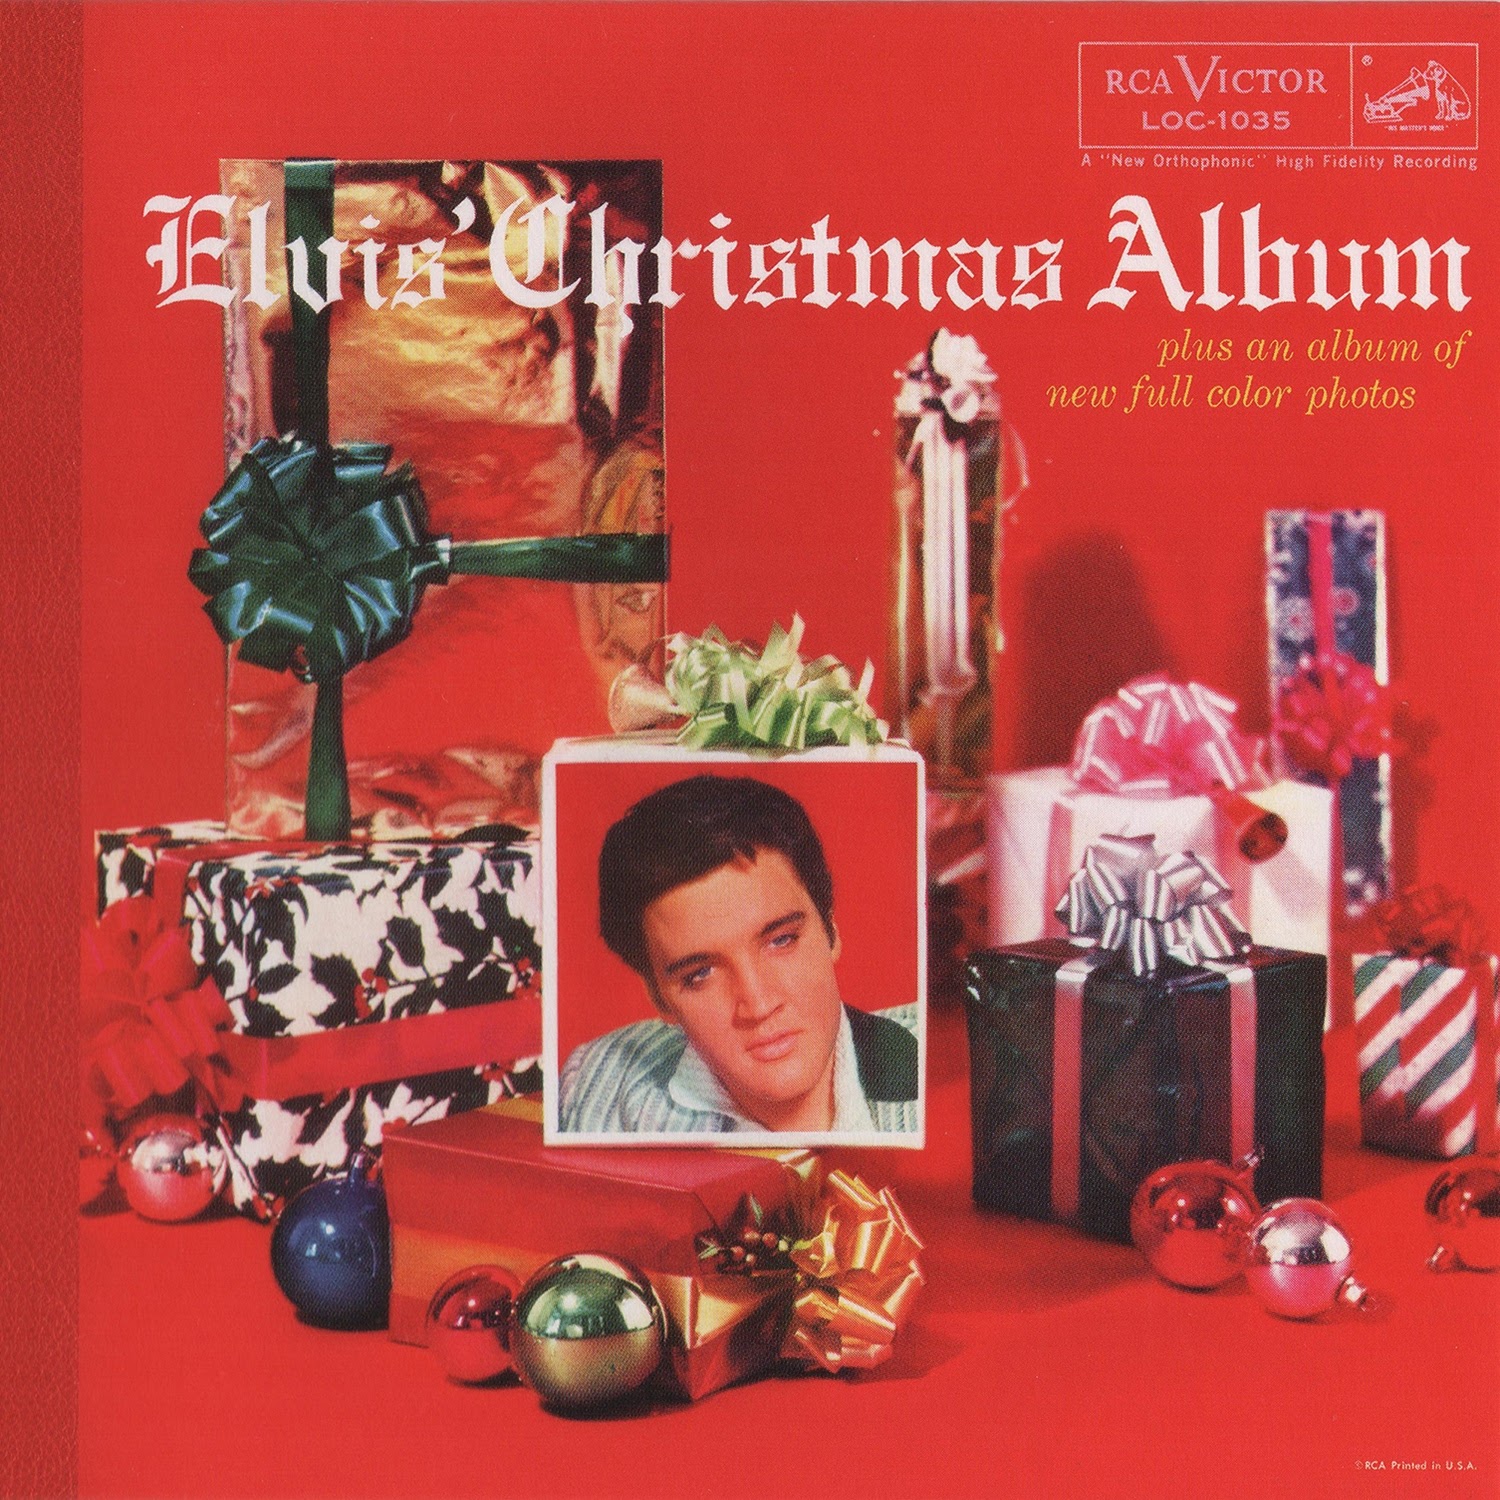 The Temptations LP: Christmas Card (LP) - Bear Family Records